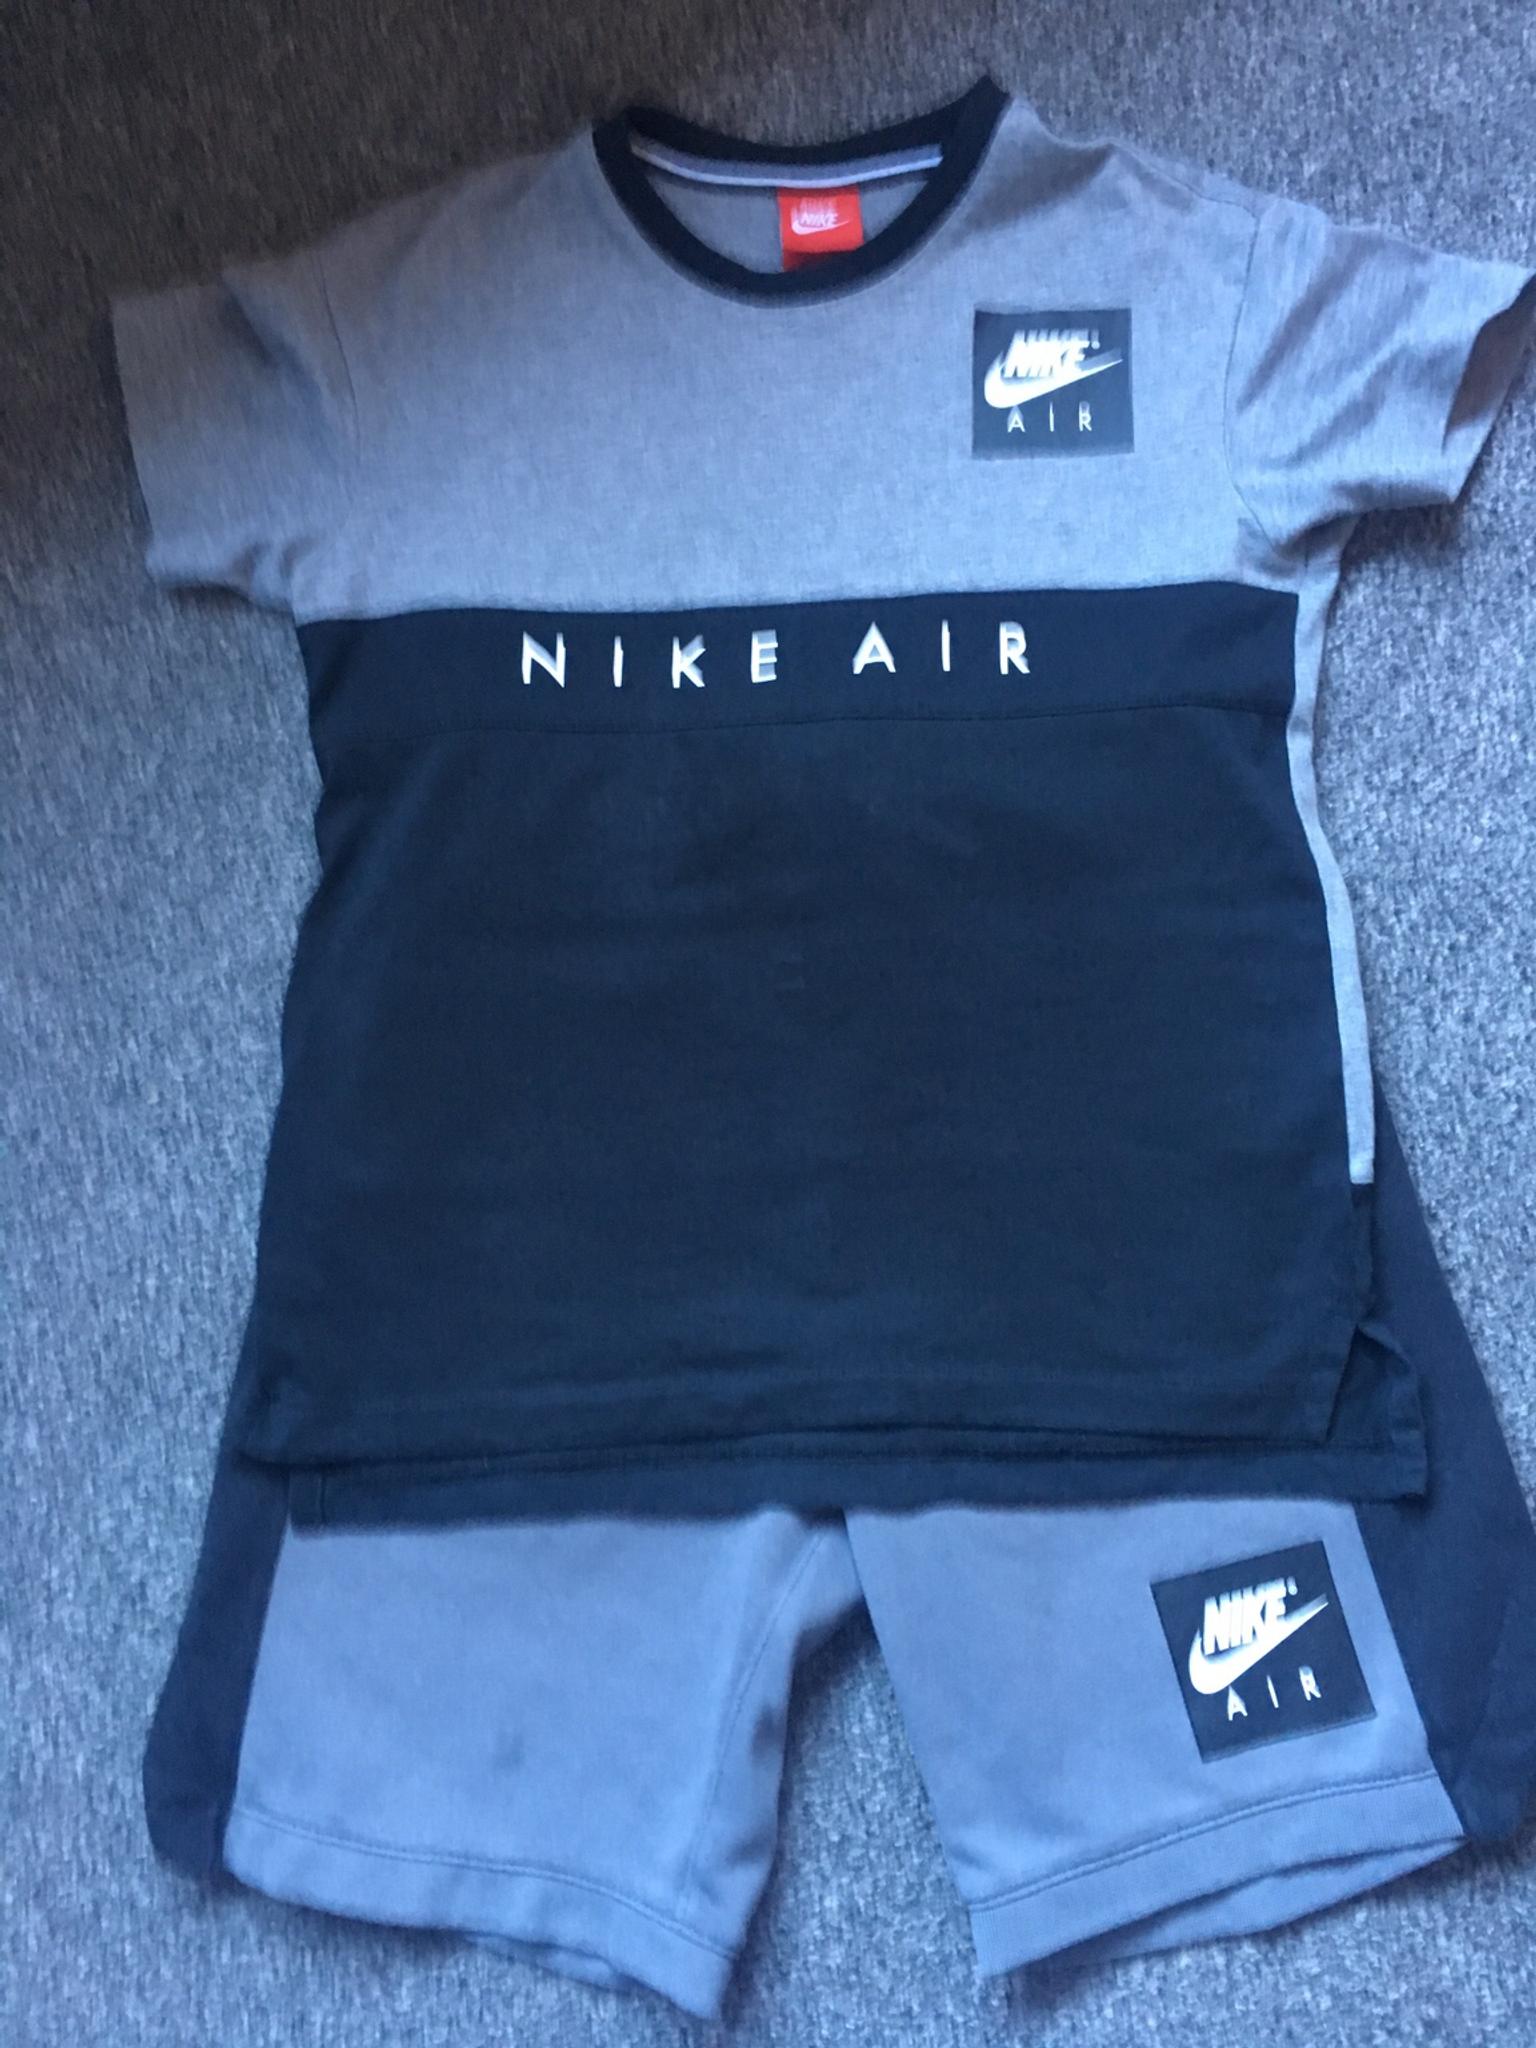 nike matching shorts and t shirt